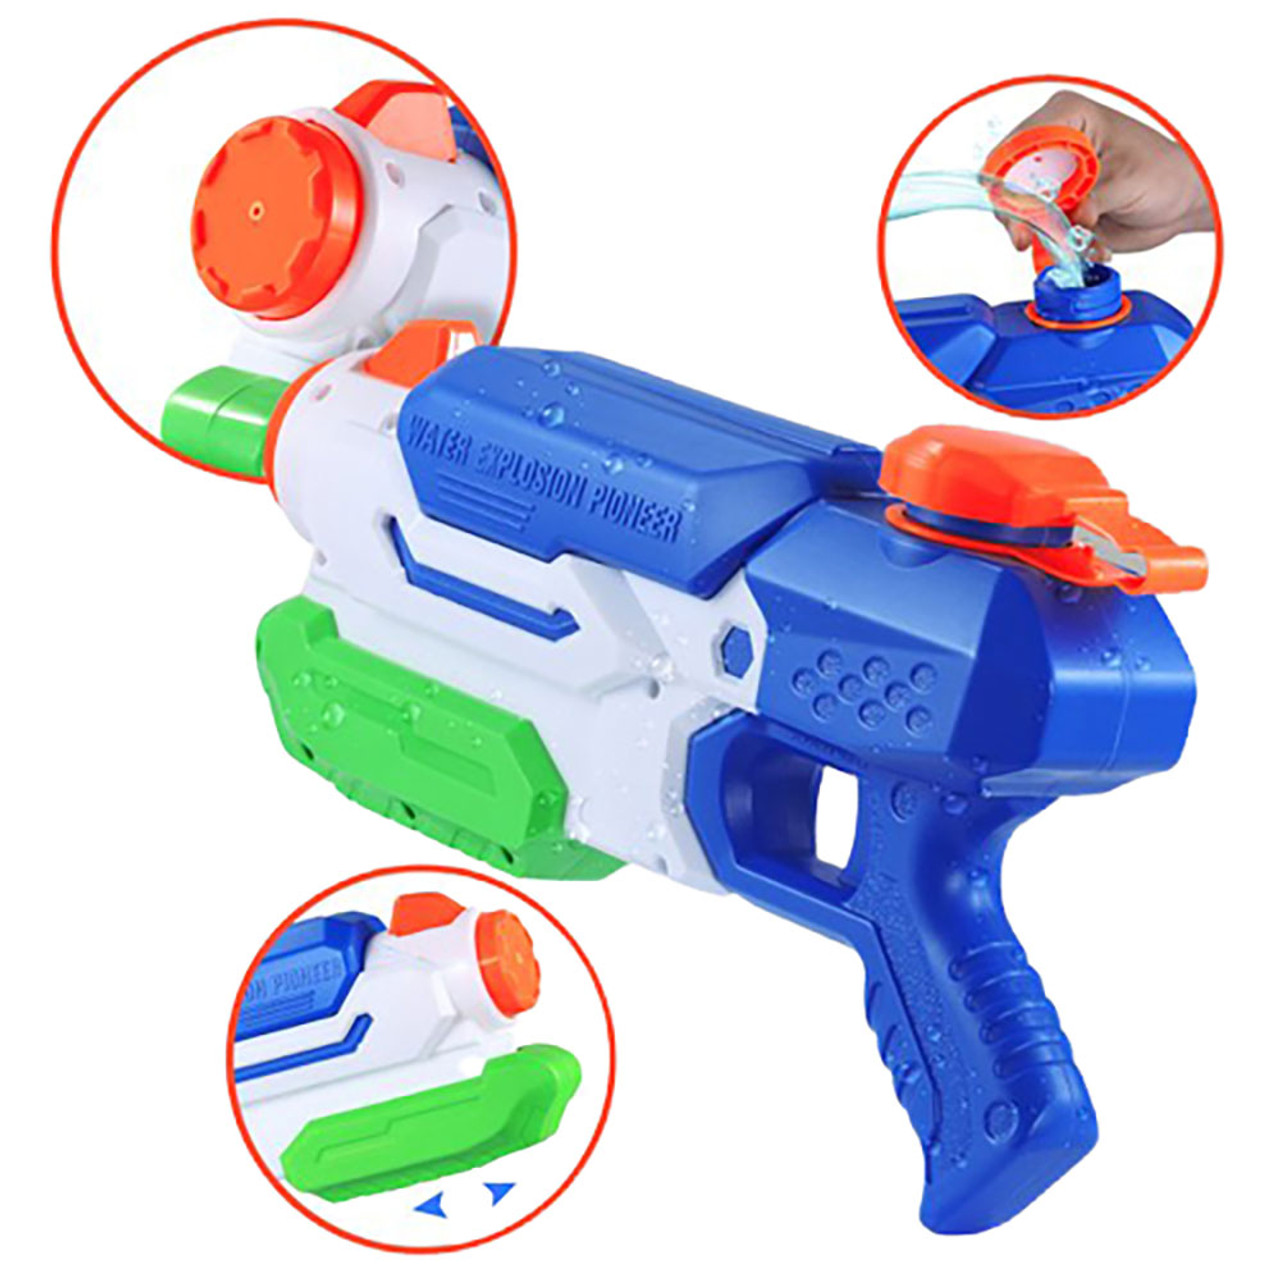  Super Blaster Fun Water Gun (2-Pack) product image